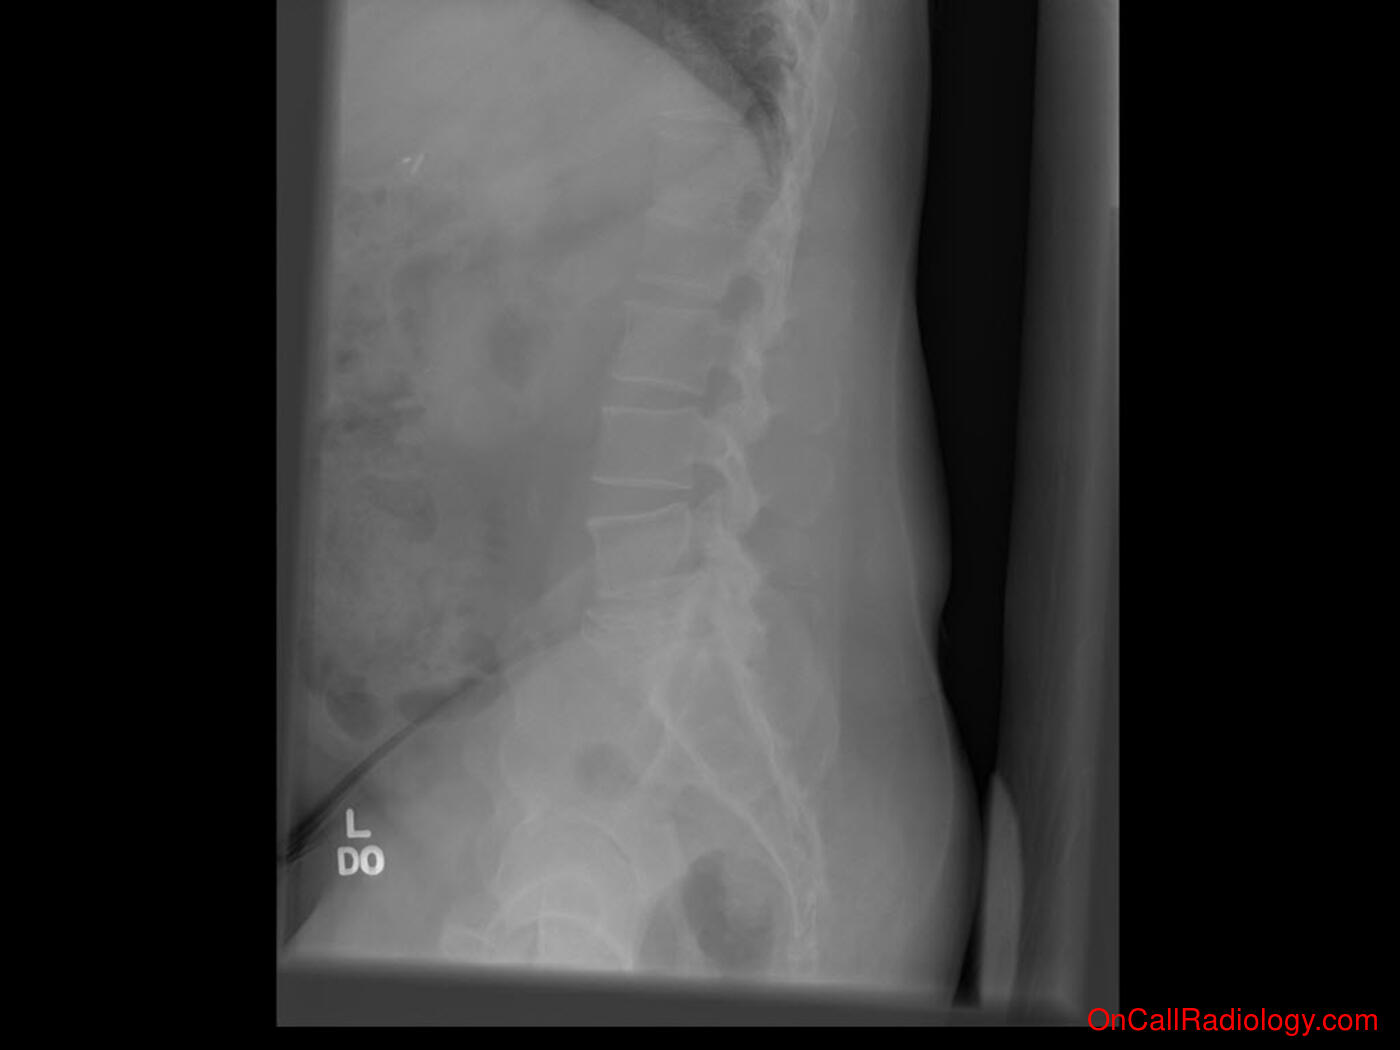 Bones (Vertebral compression fracture - Plain film, Radiograph)